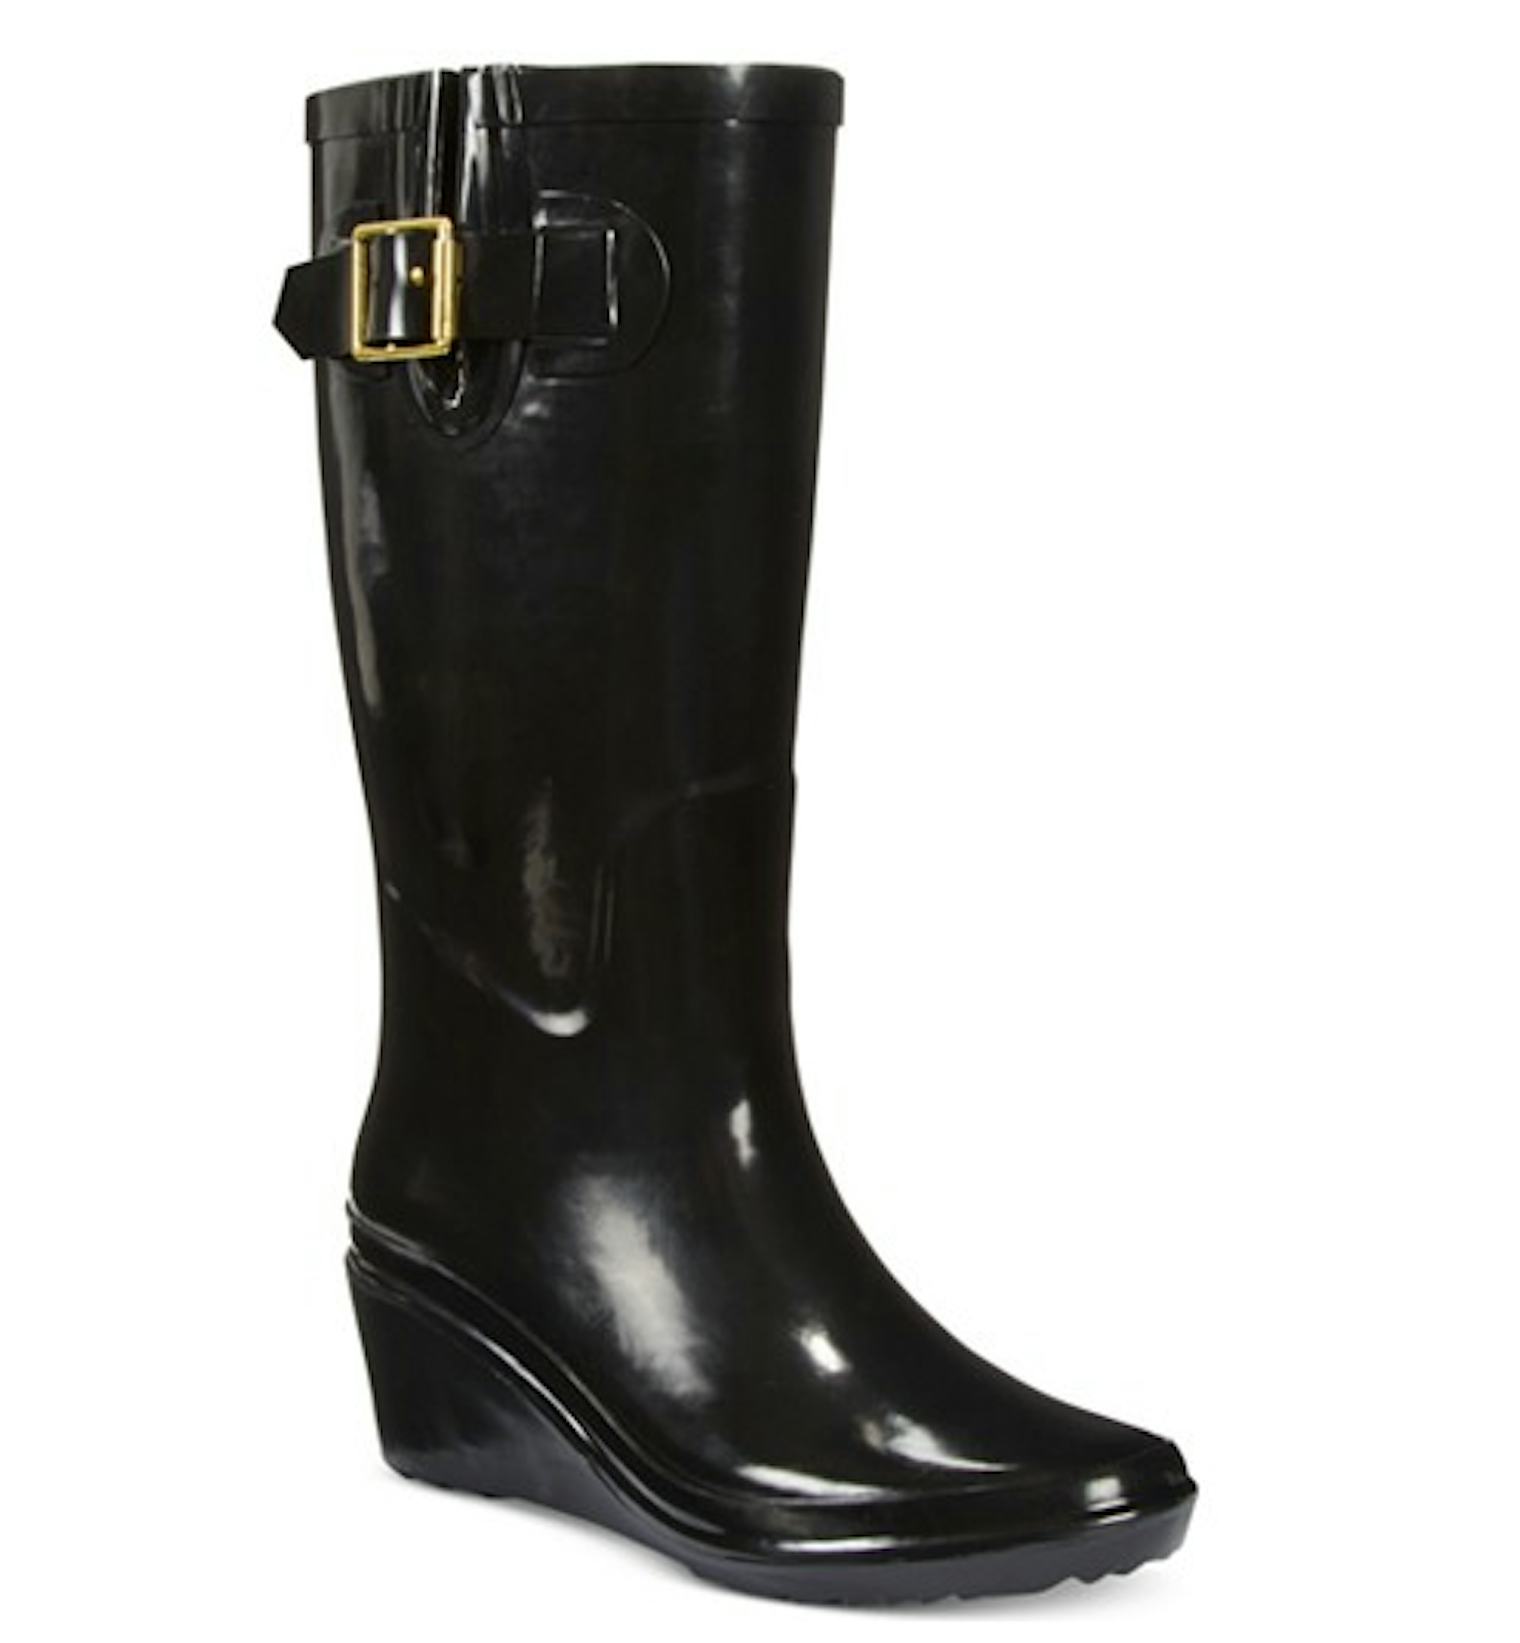 9 Heeled Rain Boots That'll Keep Your Feet Cozy, Warm, & Stylish — PHOTOS